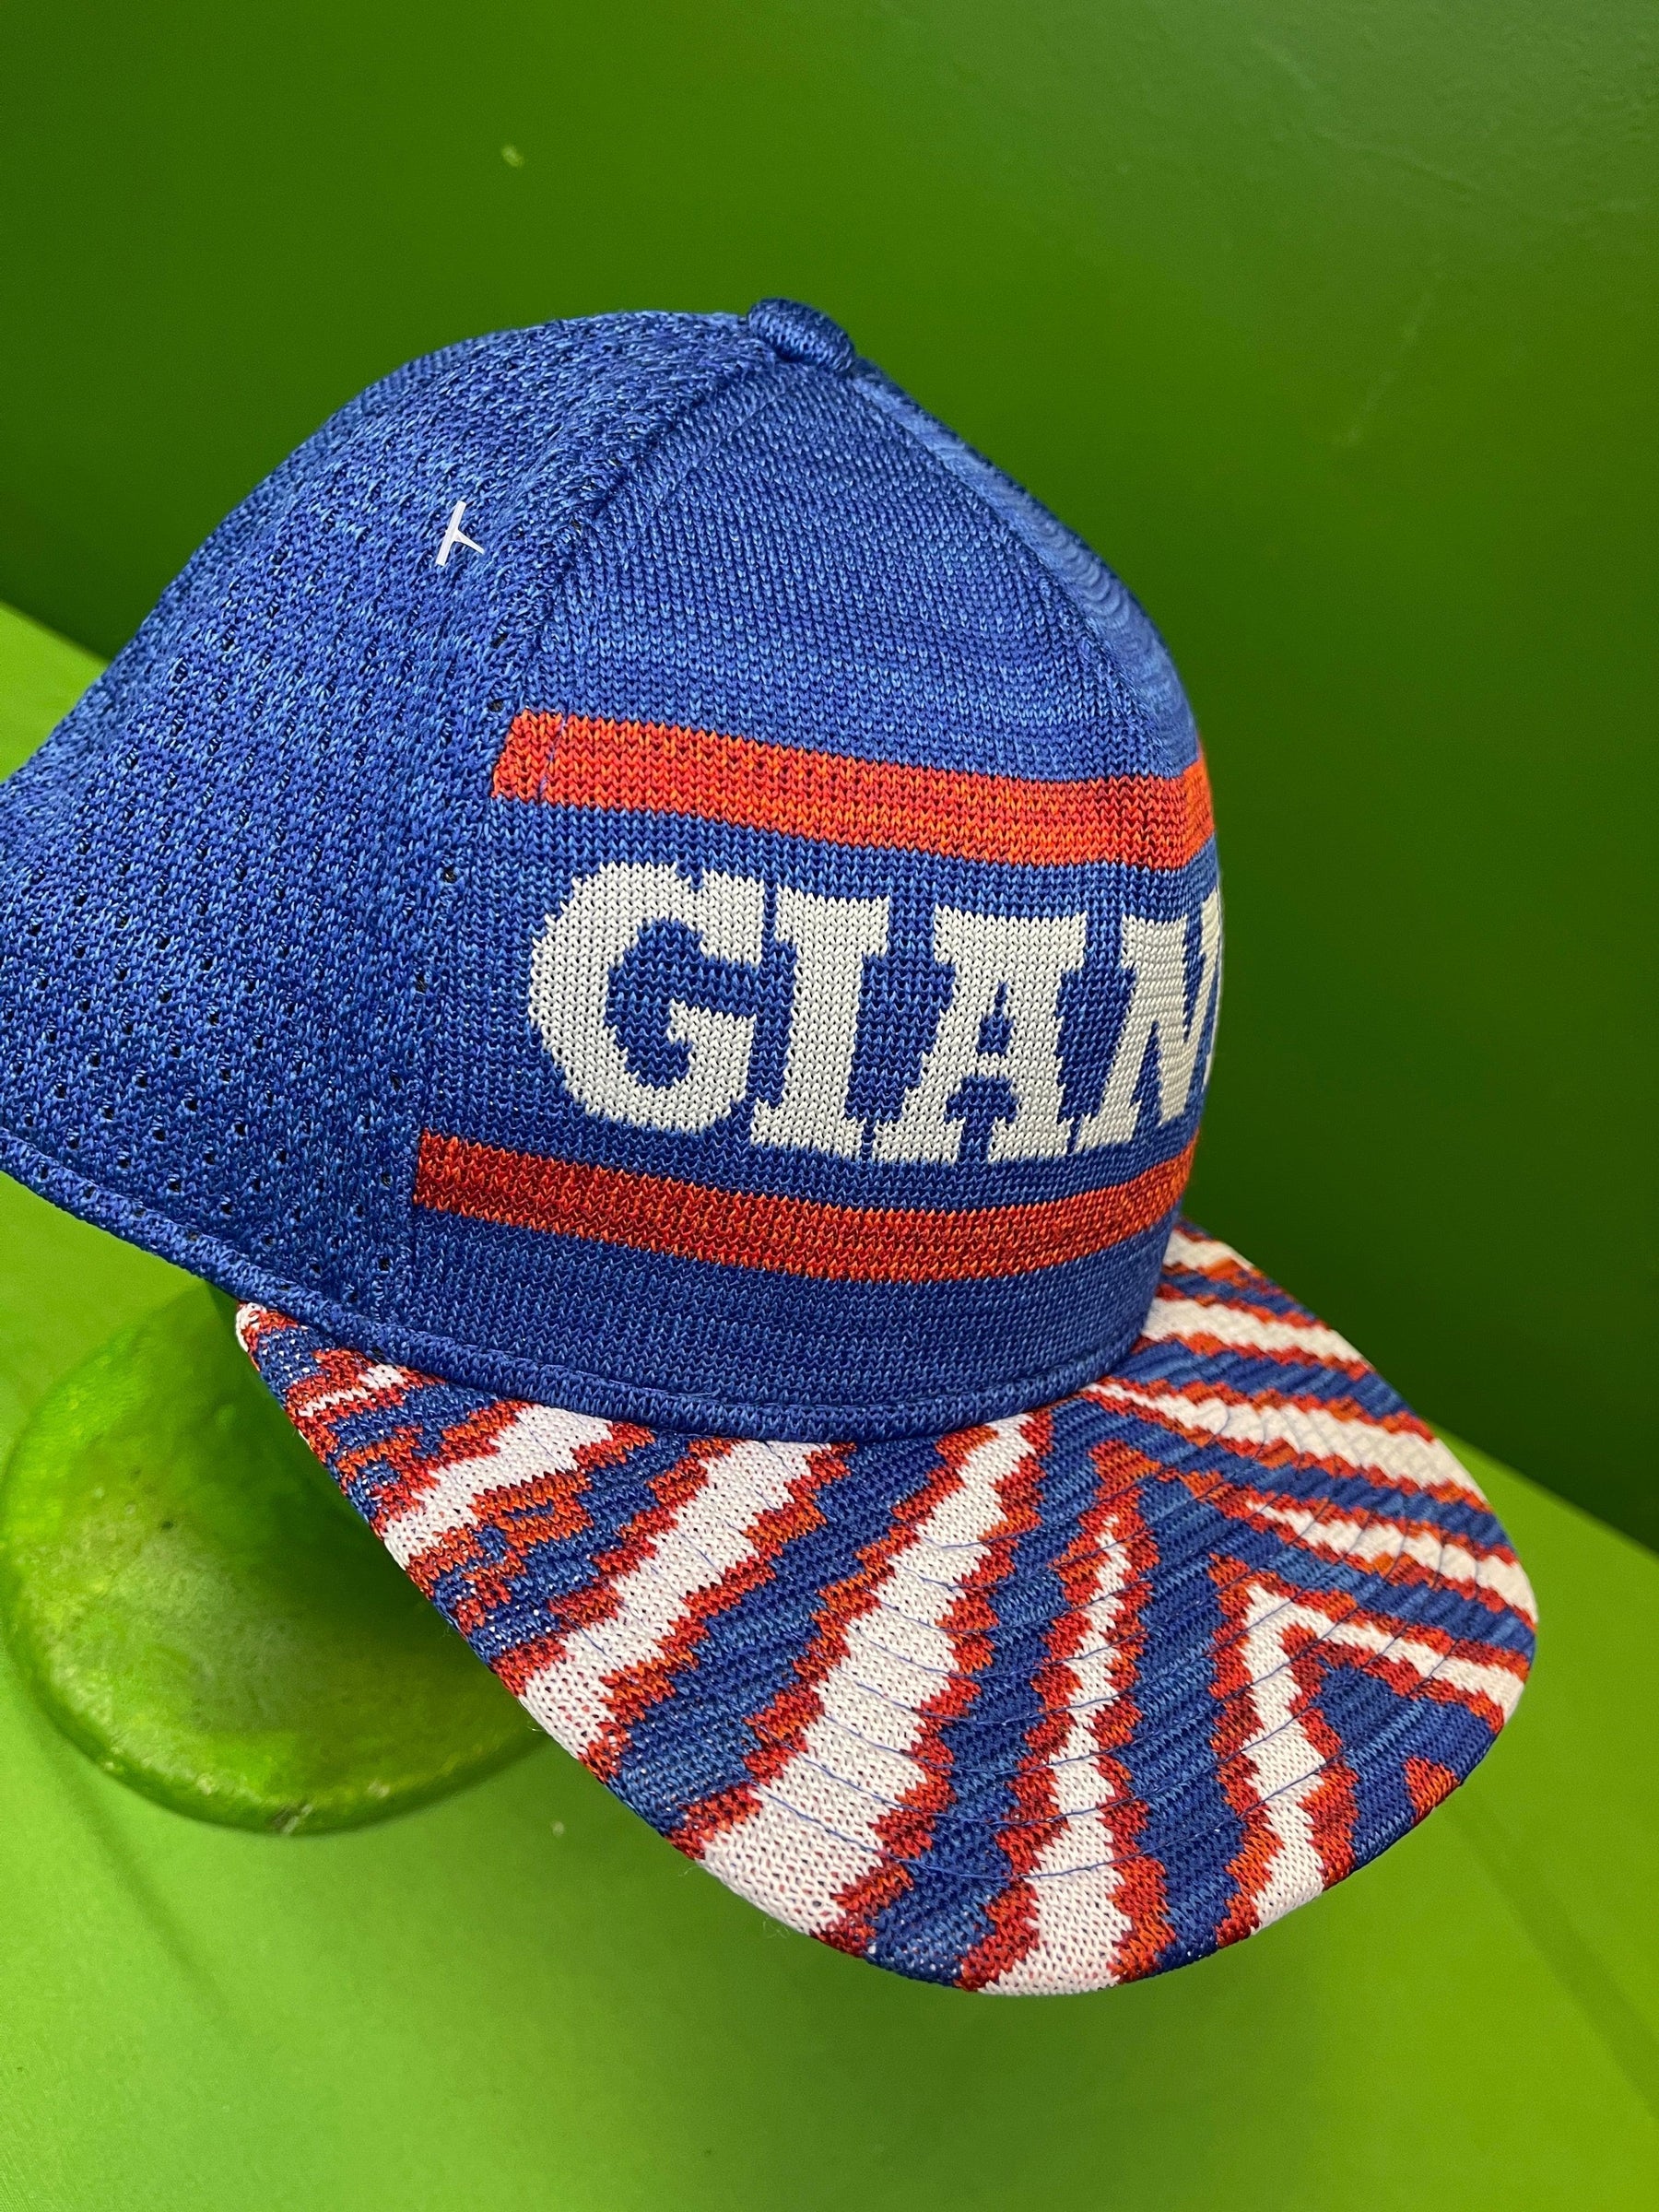 NFL New York Giants New Era 9FIFTY Knit Snapback Hat/Cap OSFM NWT